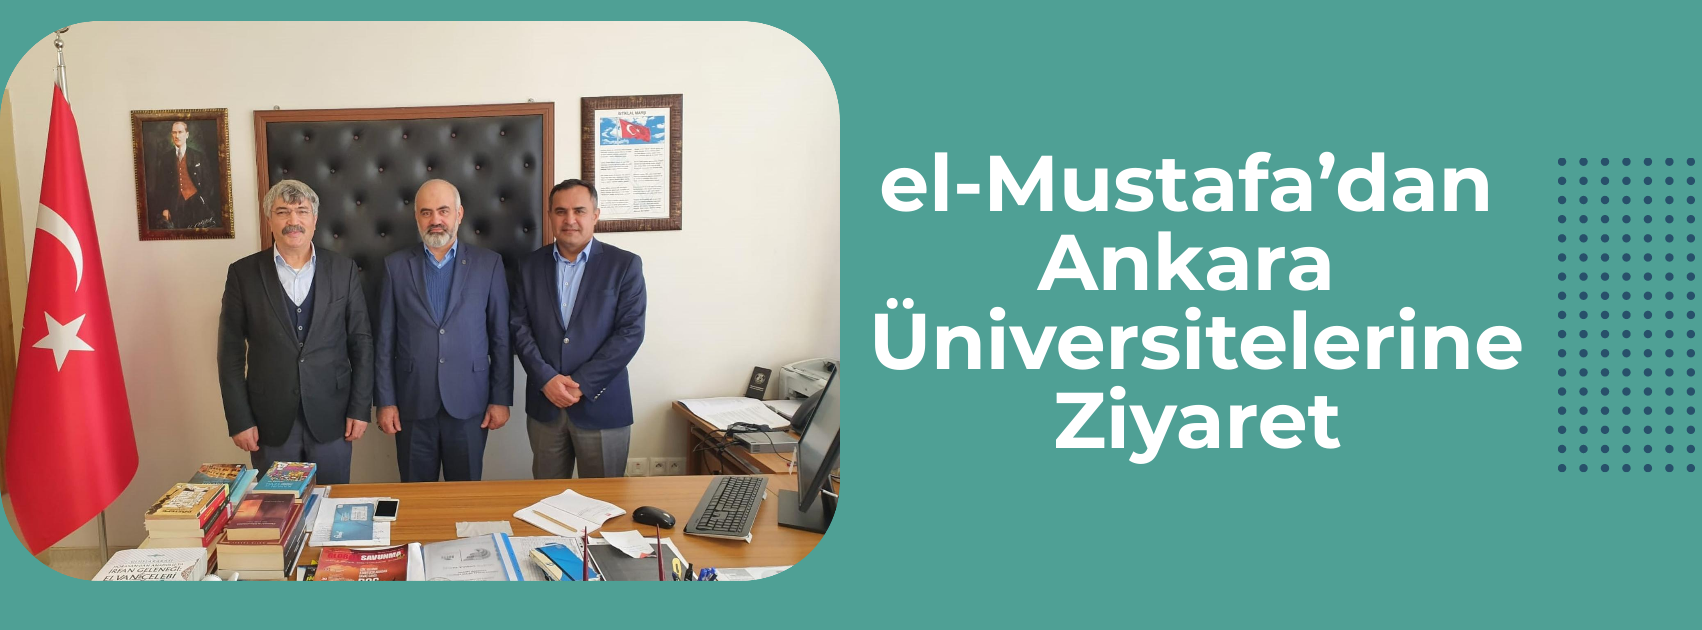 el-Mustafa’dan Ankara Üniversitelerine Ziyaret